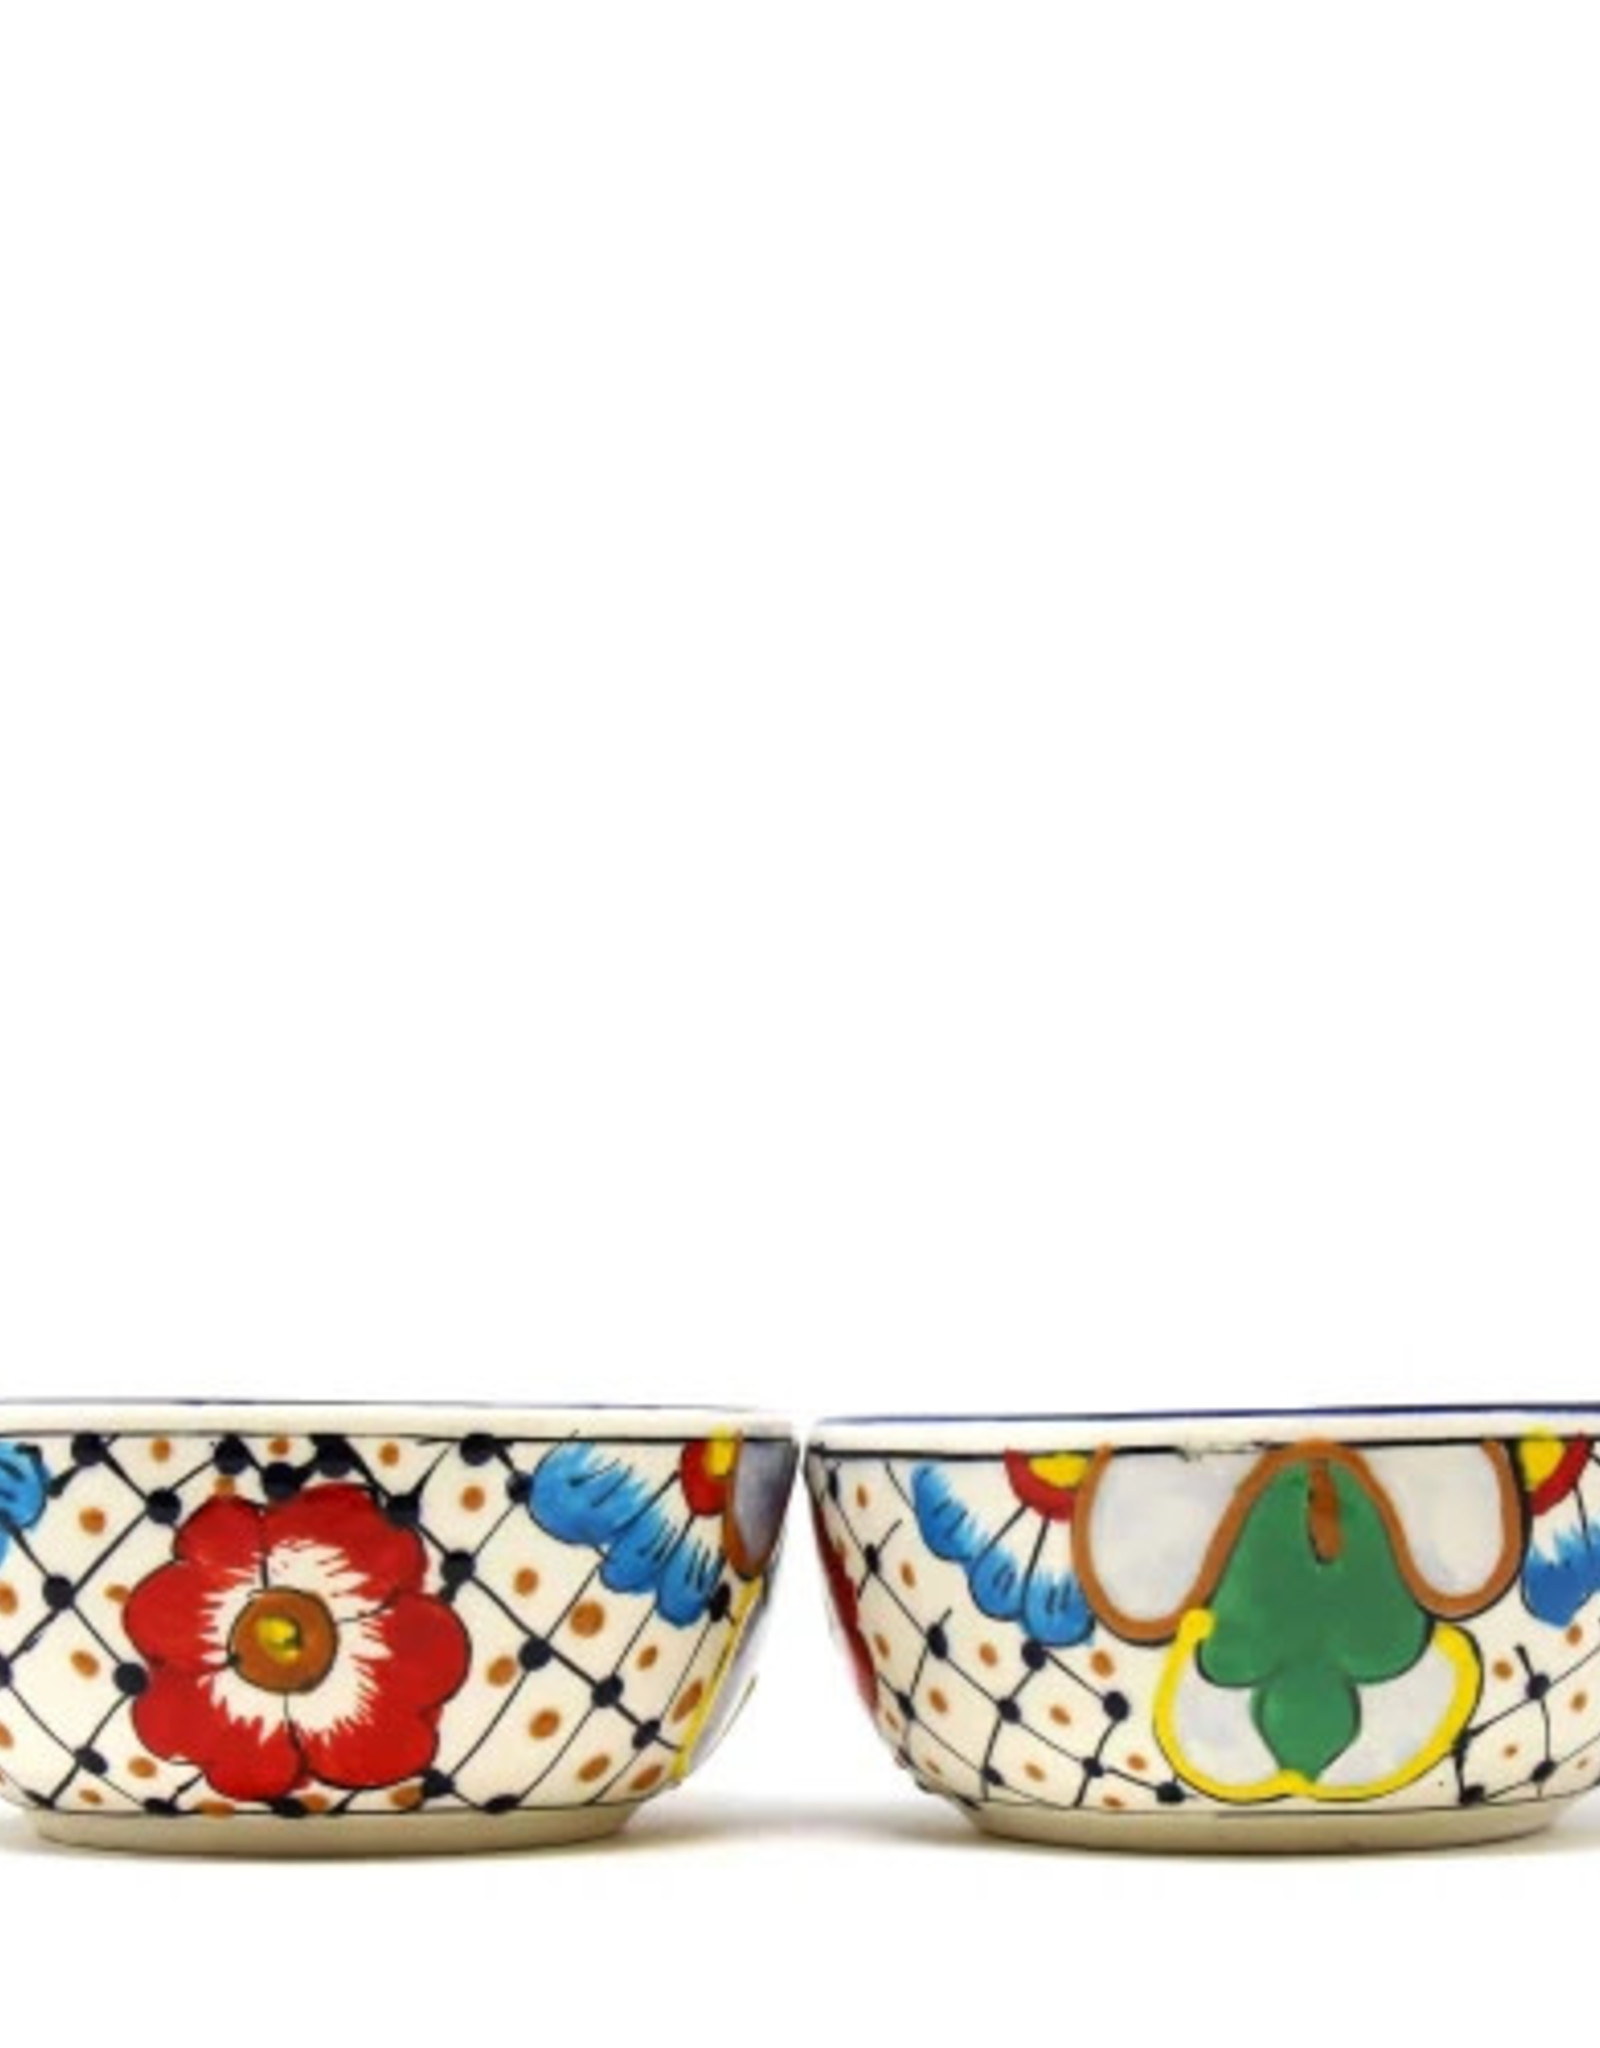 Global Crafts Encantada Bowls, Dots & Flowers